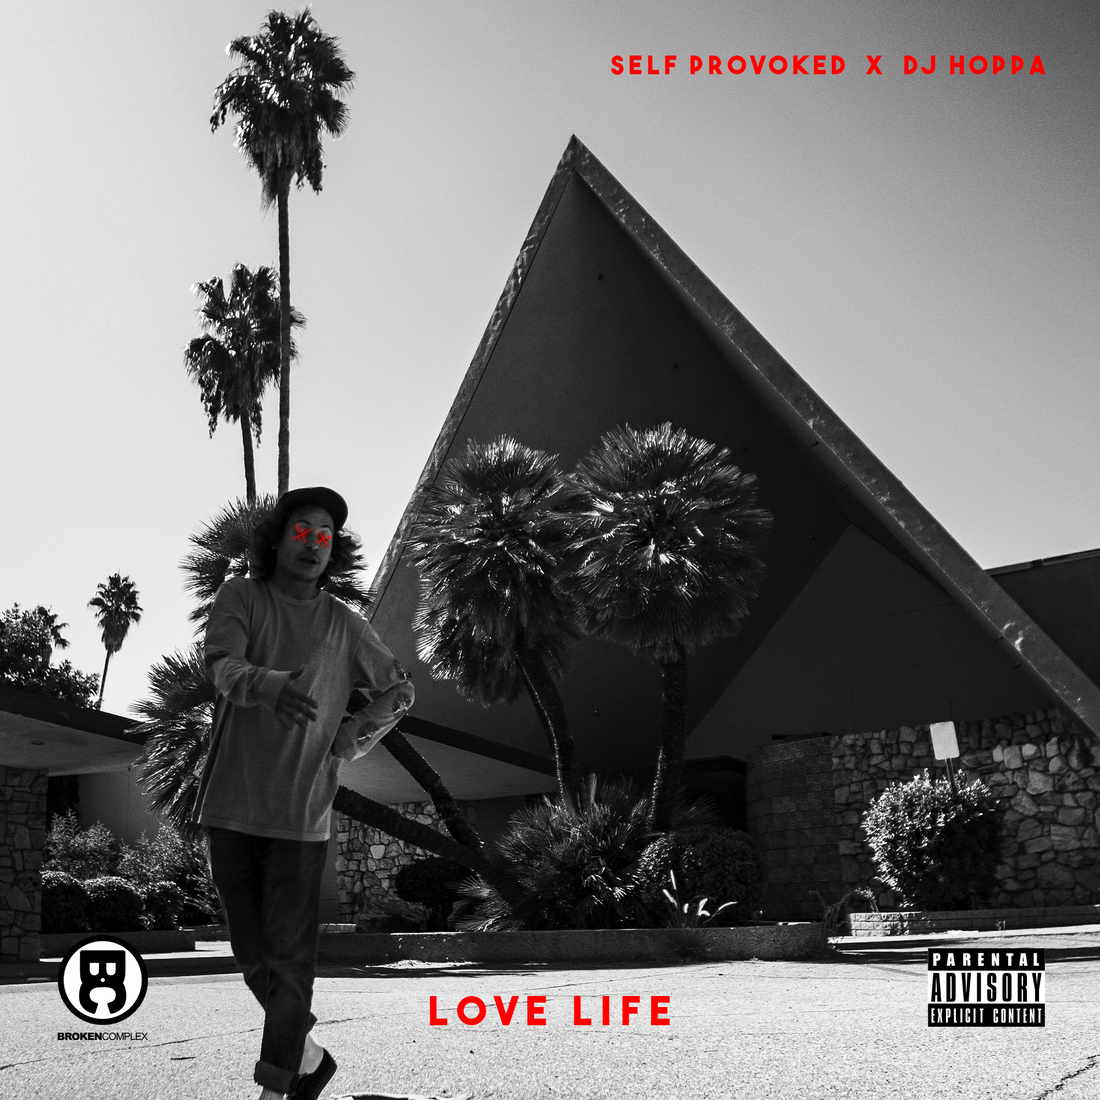 Self Provoked & DJ Hoppa - Love Life (Music Video)